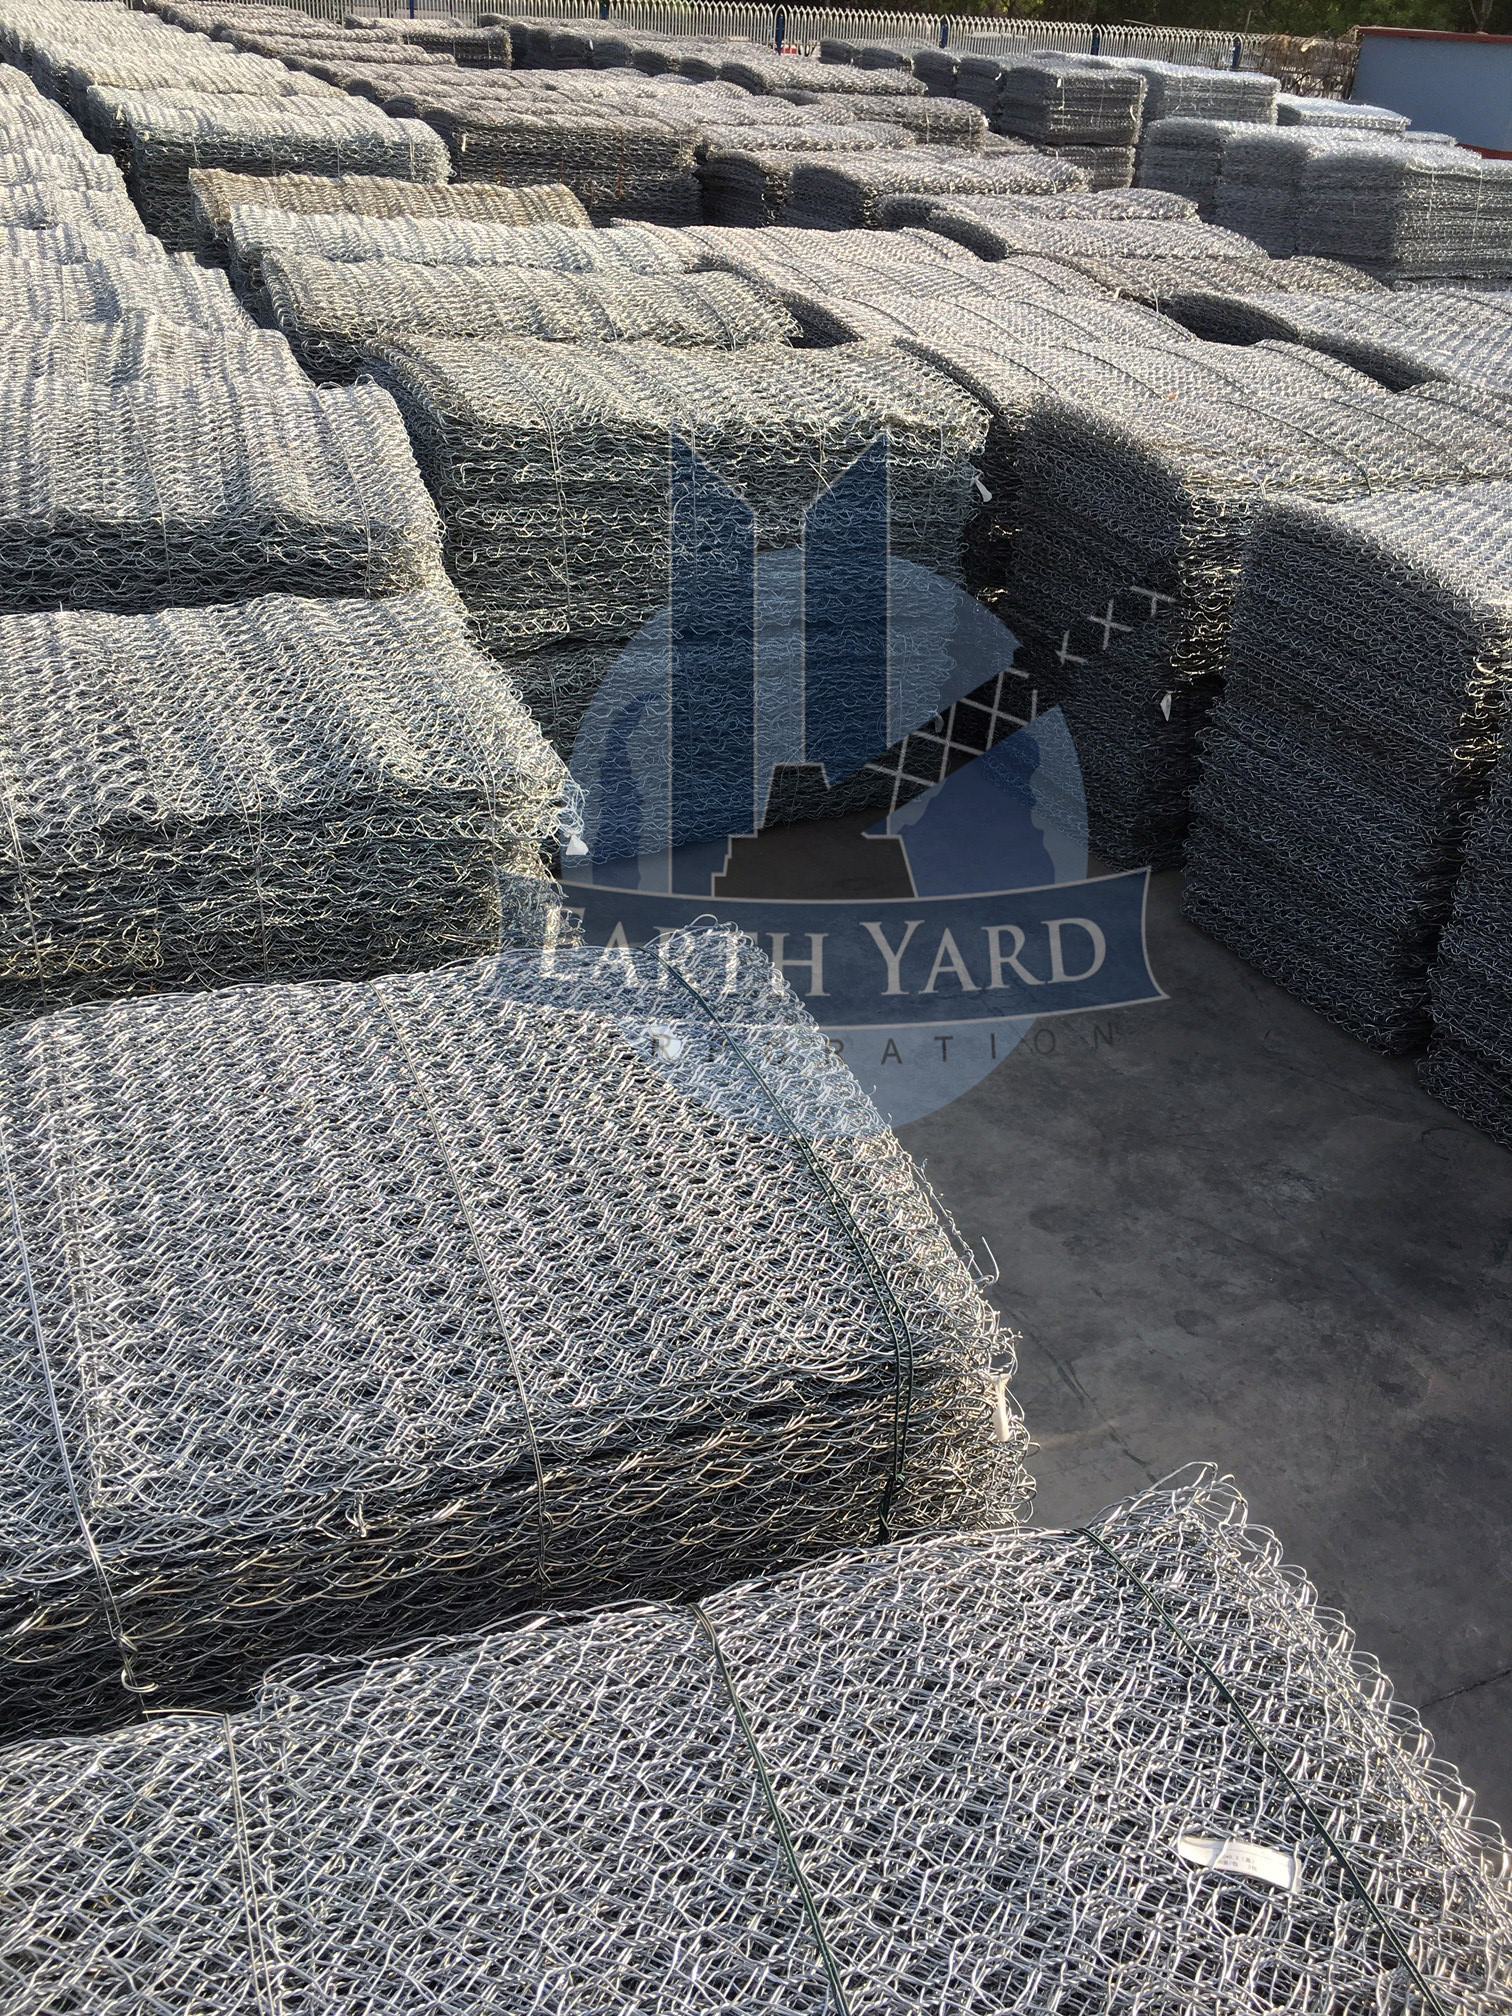 Earth Yard Corporation Factory